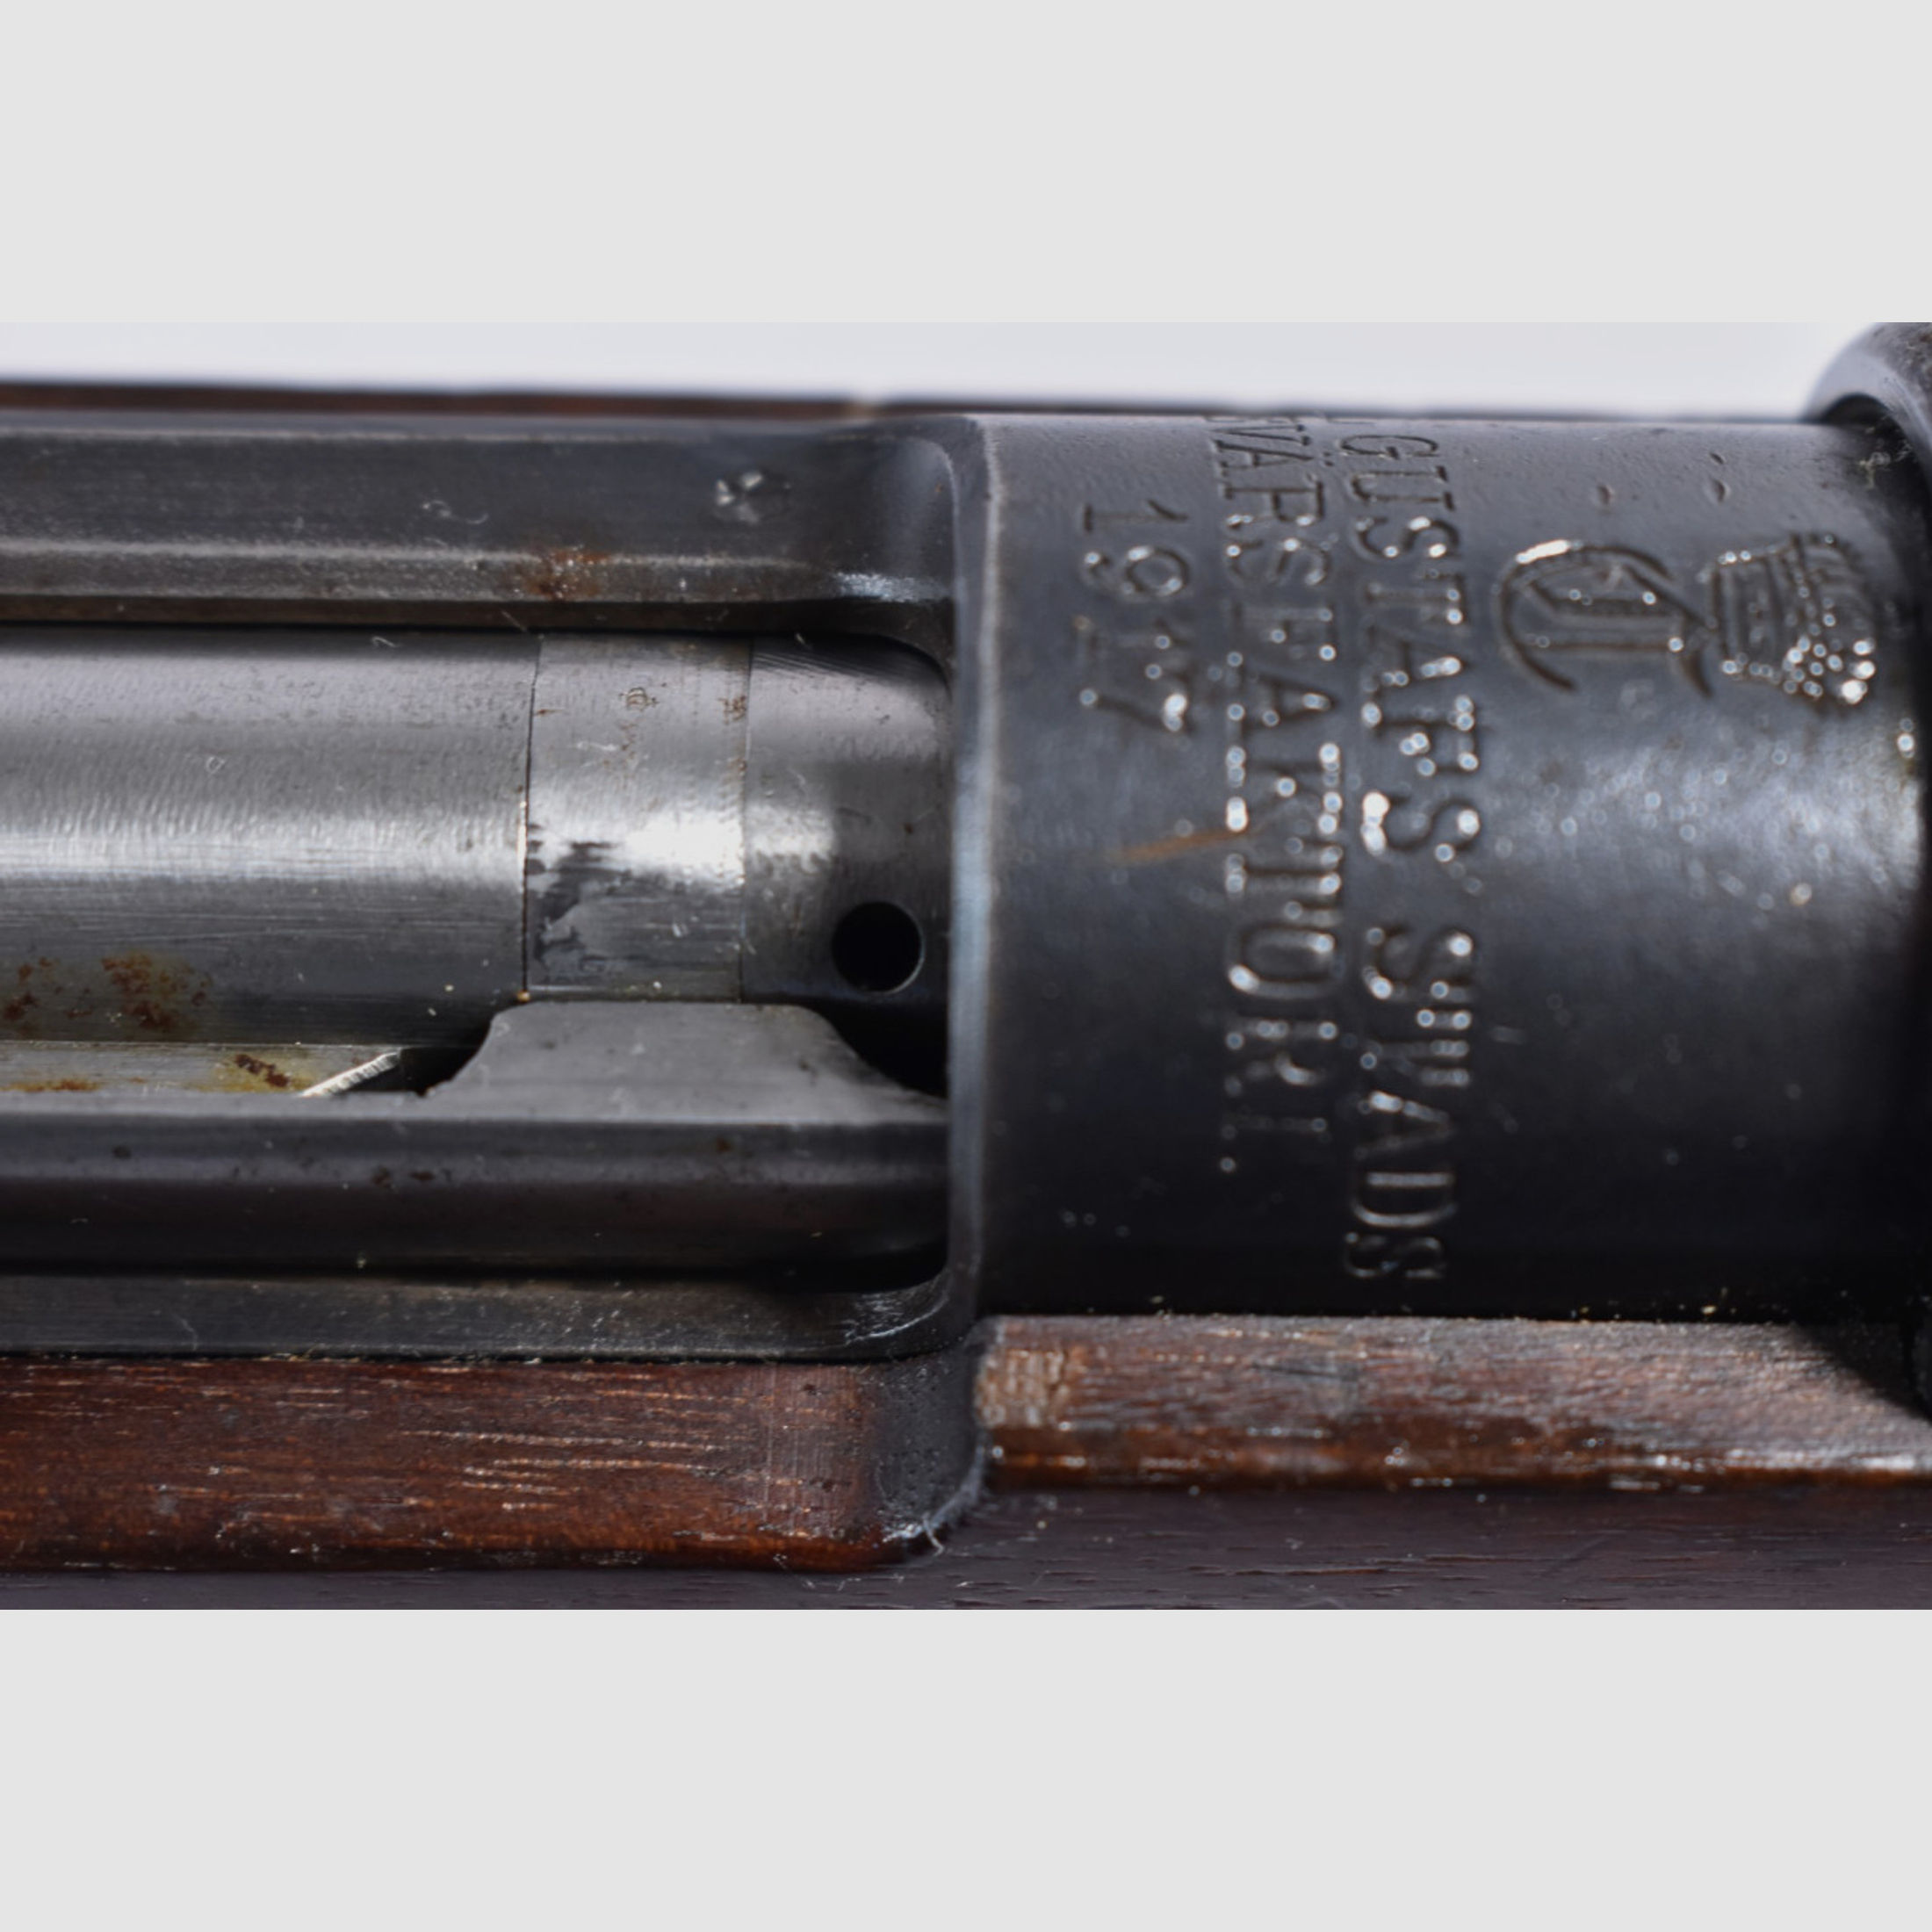 Carl Gustafs M1896-1917 6,5x55SE Repetierbüchse